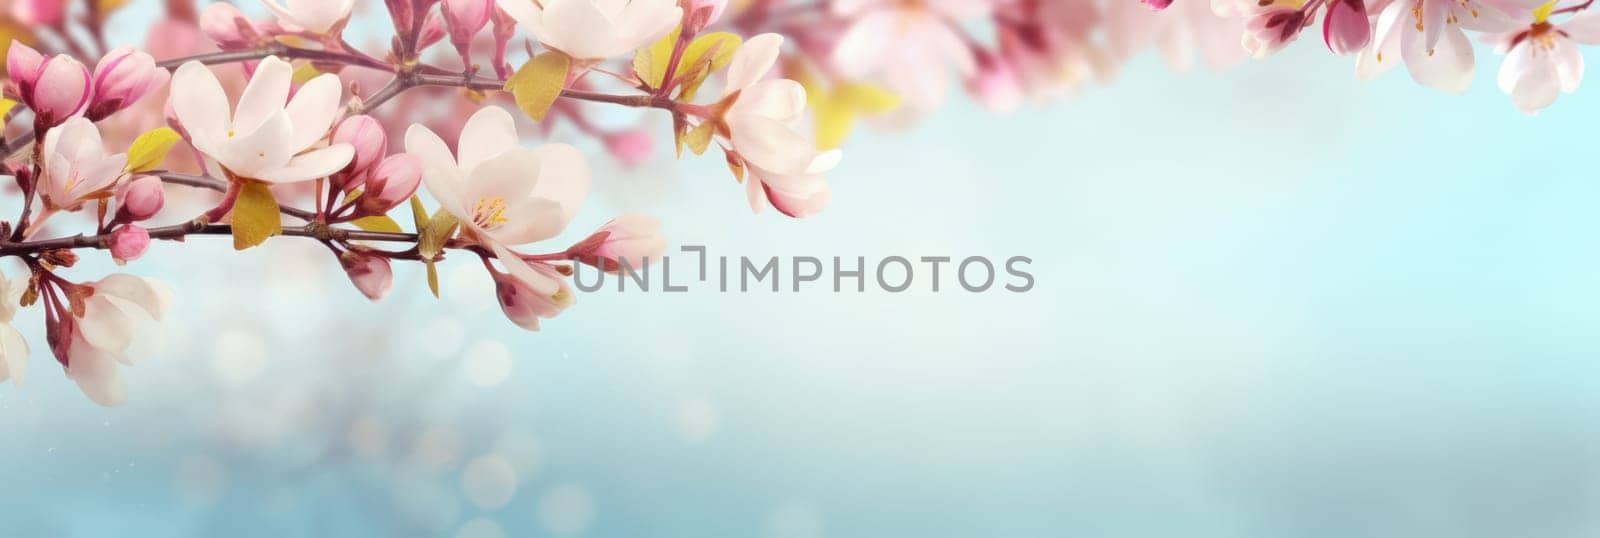 Cherry blossom flower blooming. Pink sakura flower background. Pink cherry blossom, isolated Sakura tree branch. For card, banner, invitation, social media post, poster, mobile apps, advertising. by Angelsmoon